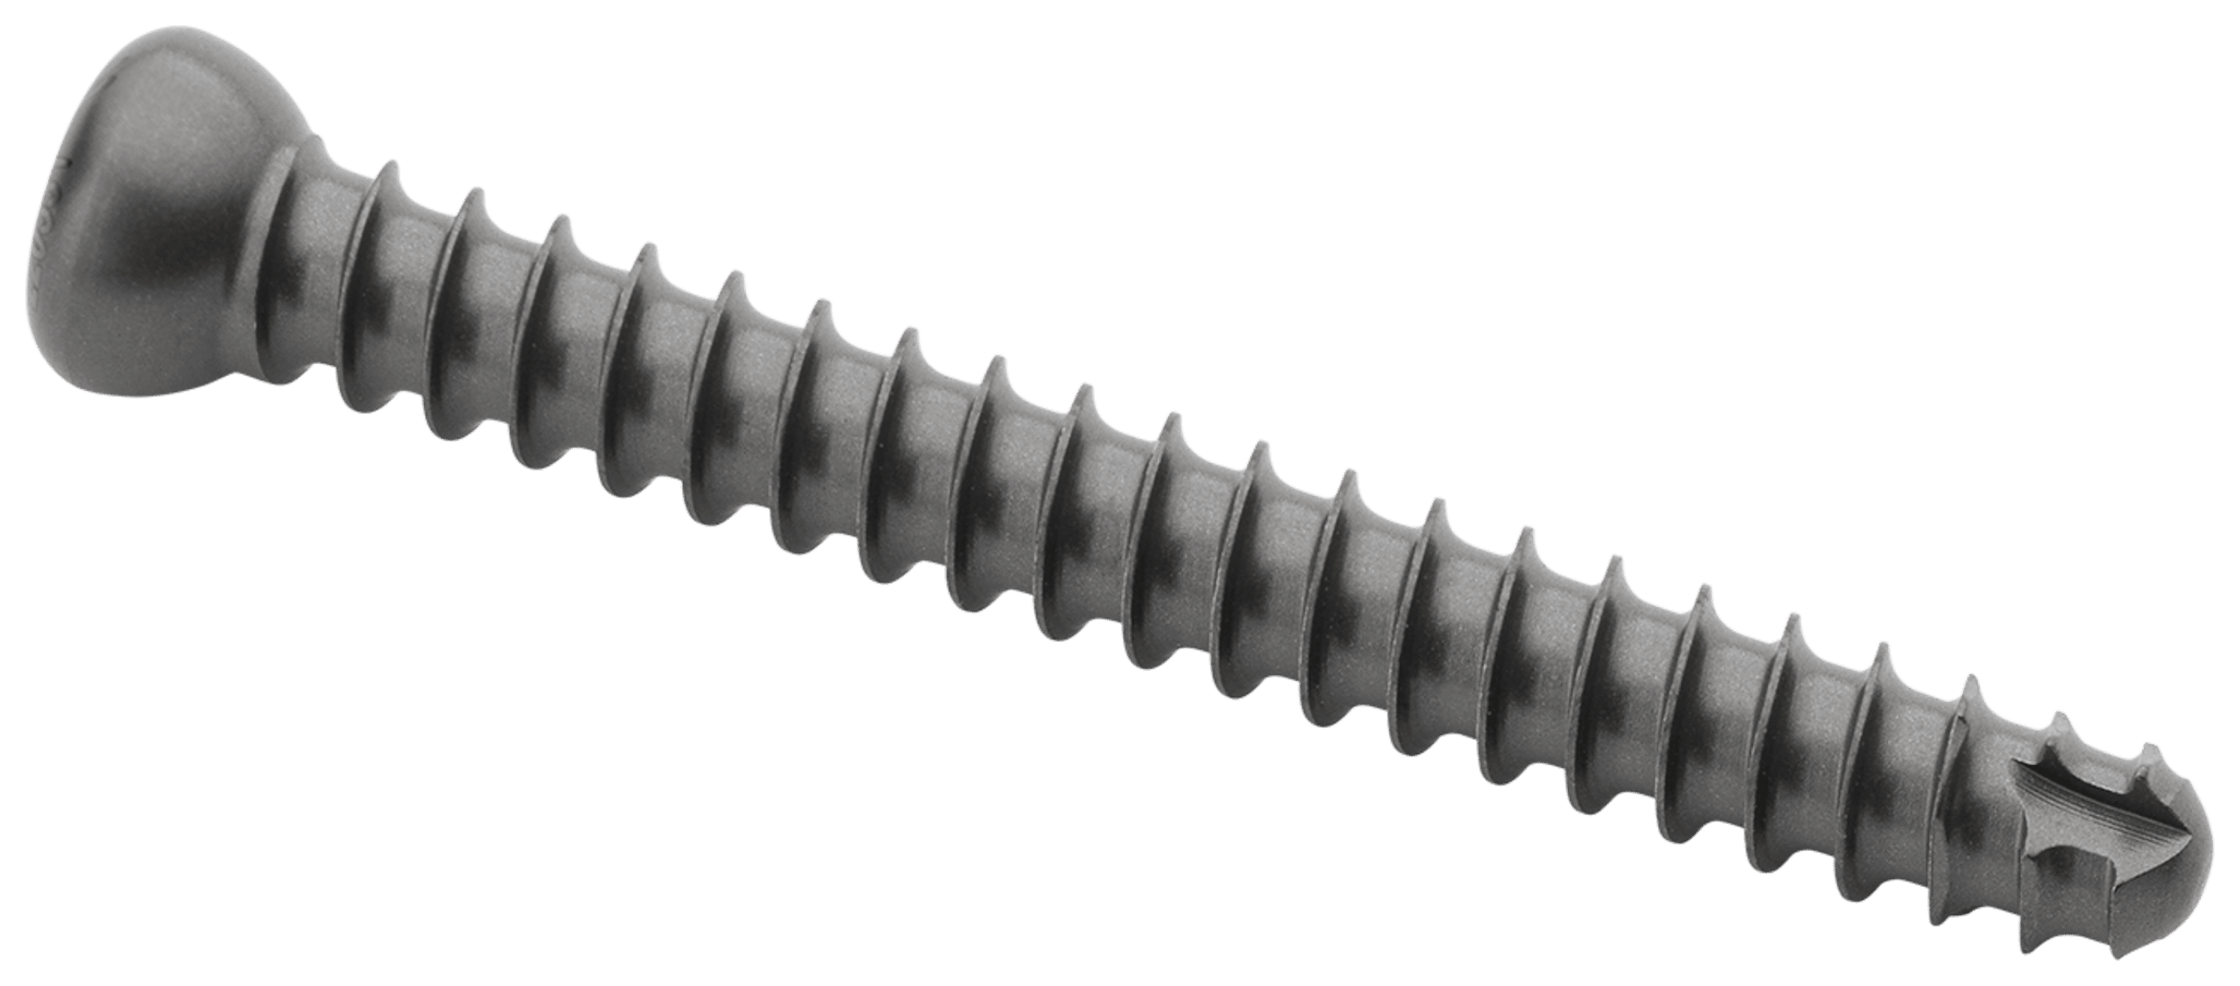 Cancellous Screw, 5.0 mm × 40 mm